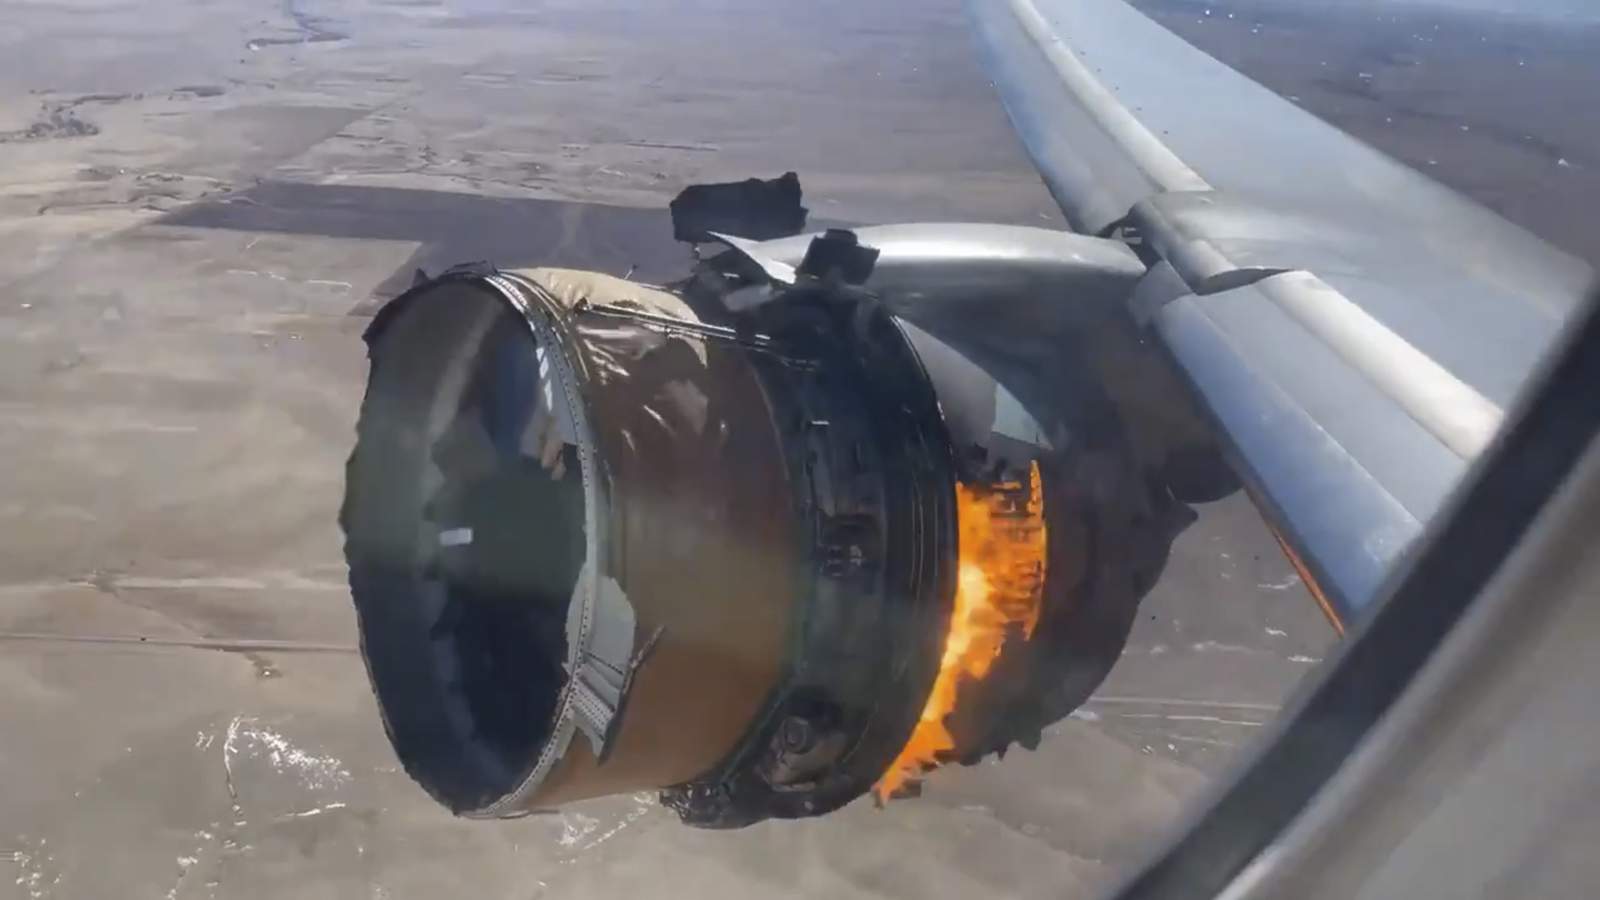 EXPLAINER: Why a plane's engine exploded over Denver